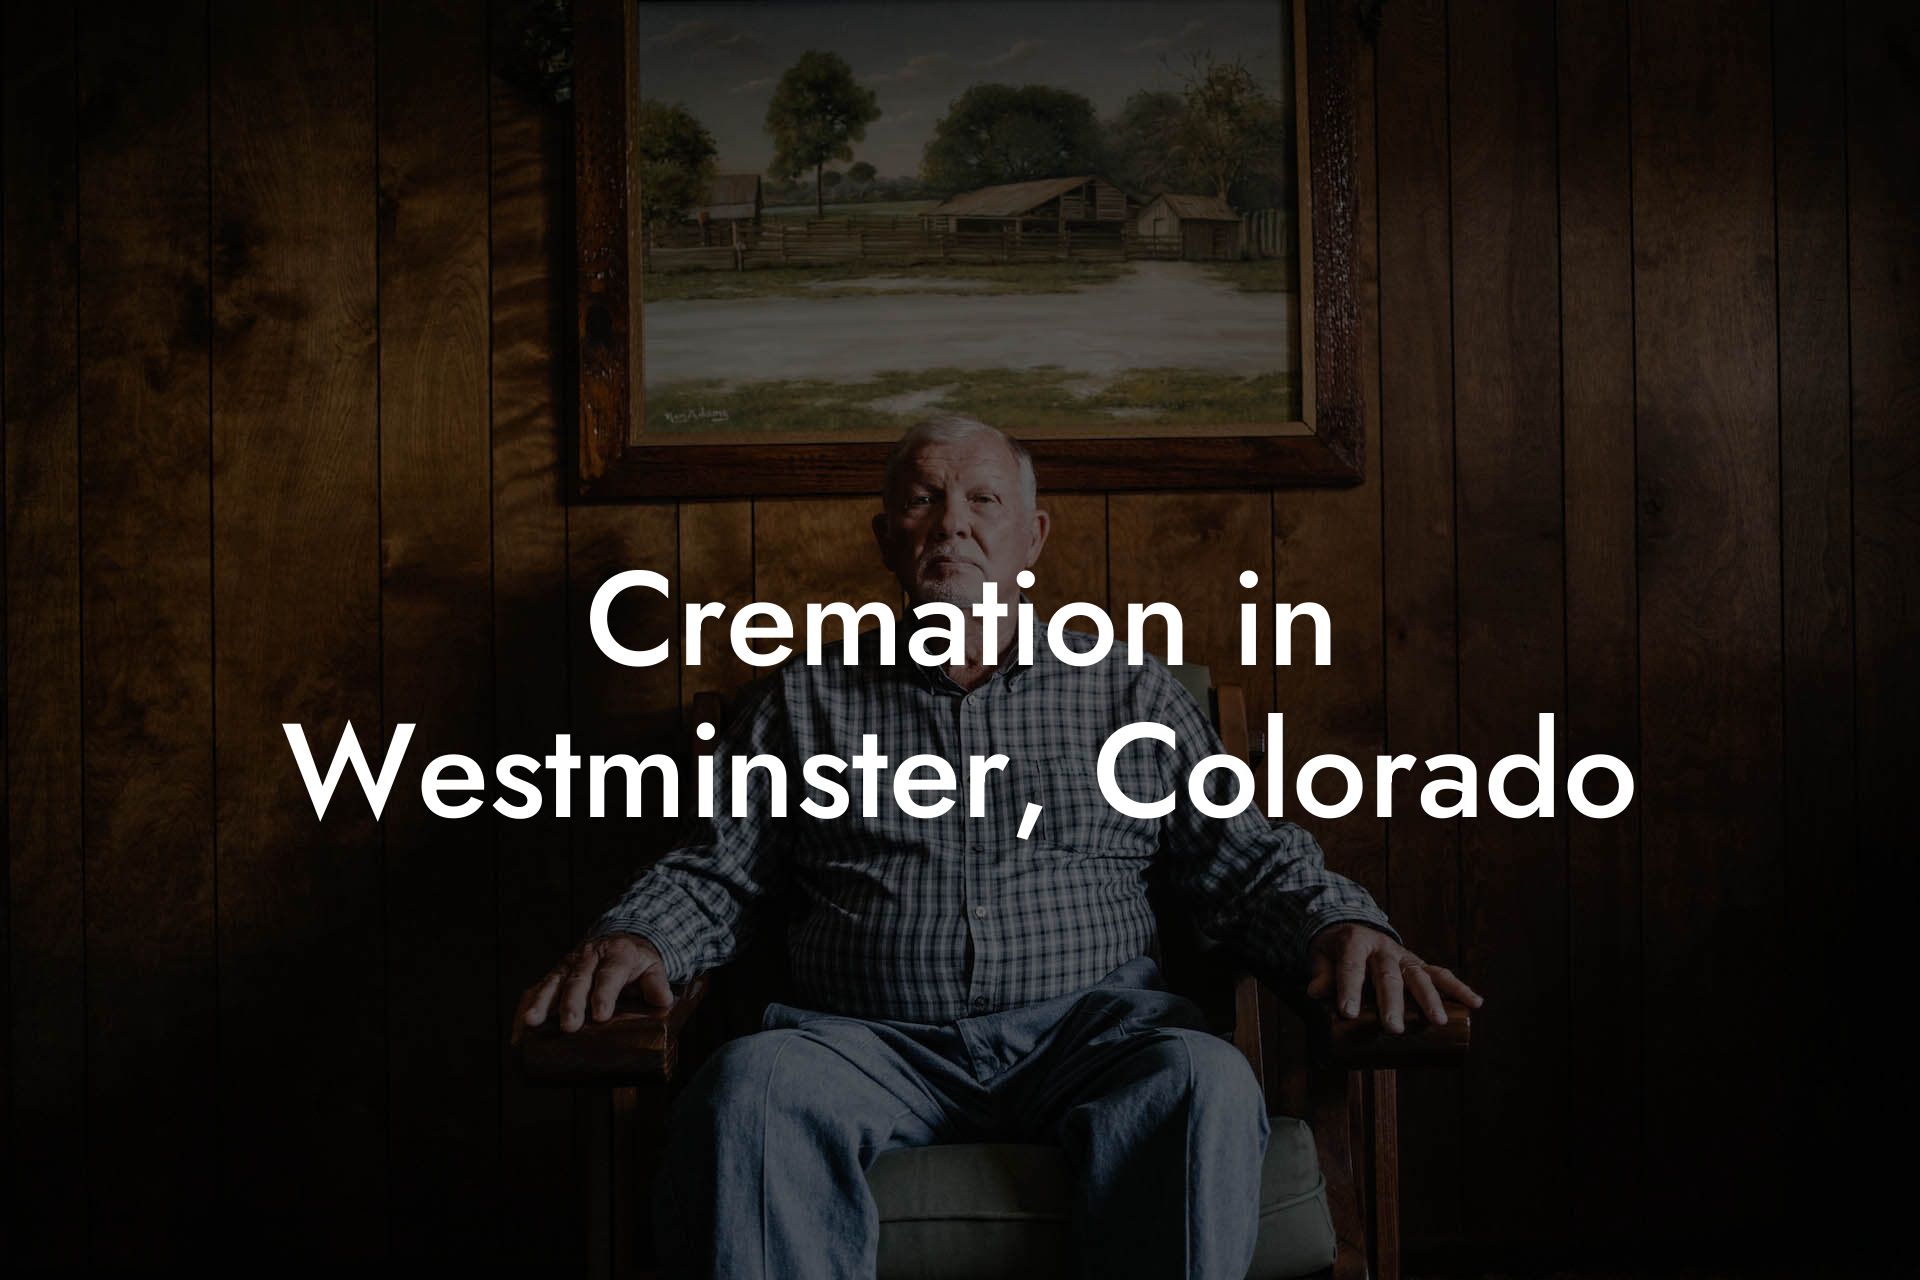 Cremation in Westminster, Colorado